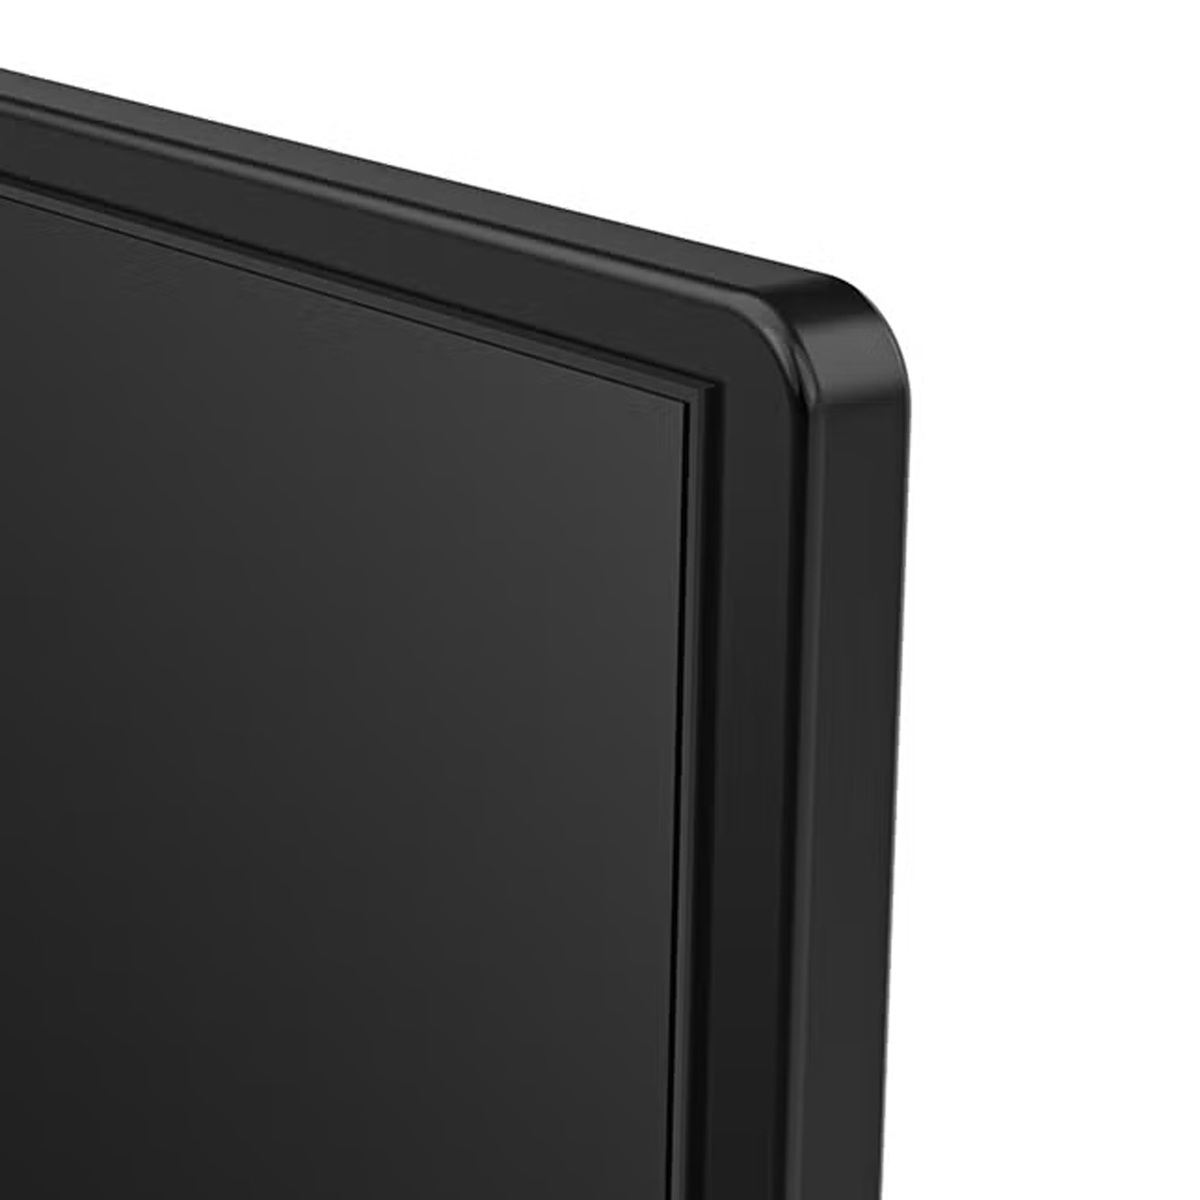 Toshiba 65 Inches 4K Smart LED TV, Black, 65C350LW